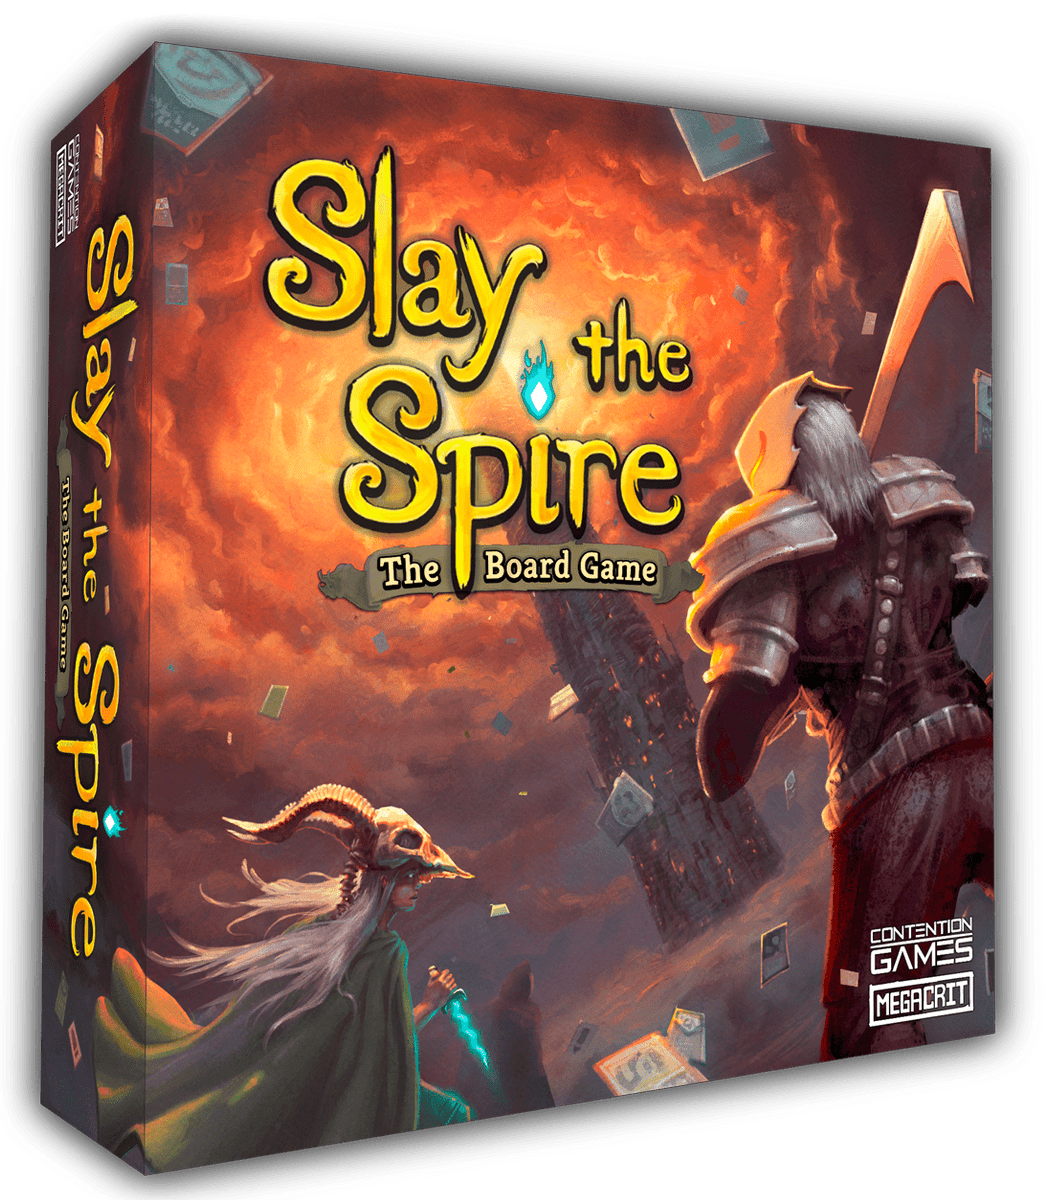 Slay the Spire review – an electrifying sense of chaos, Games